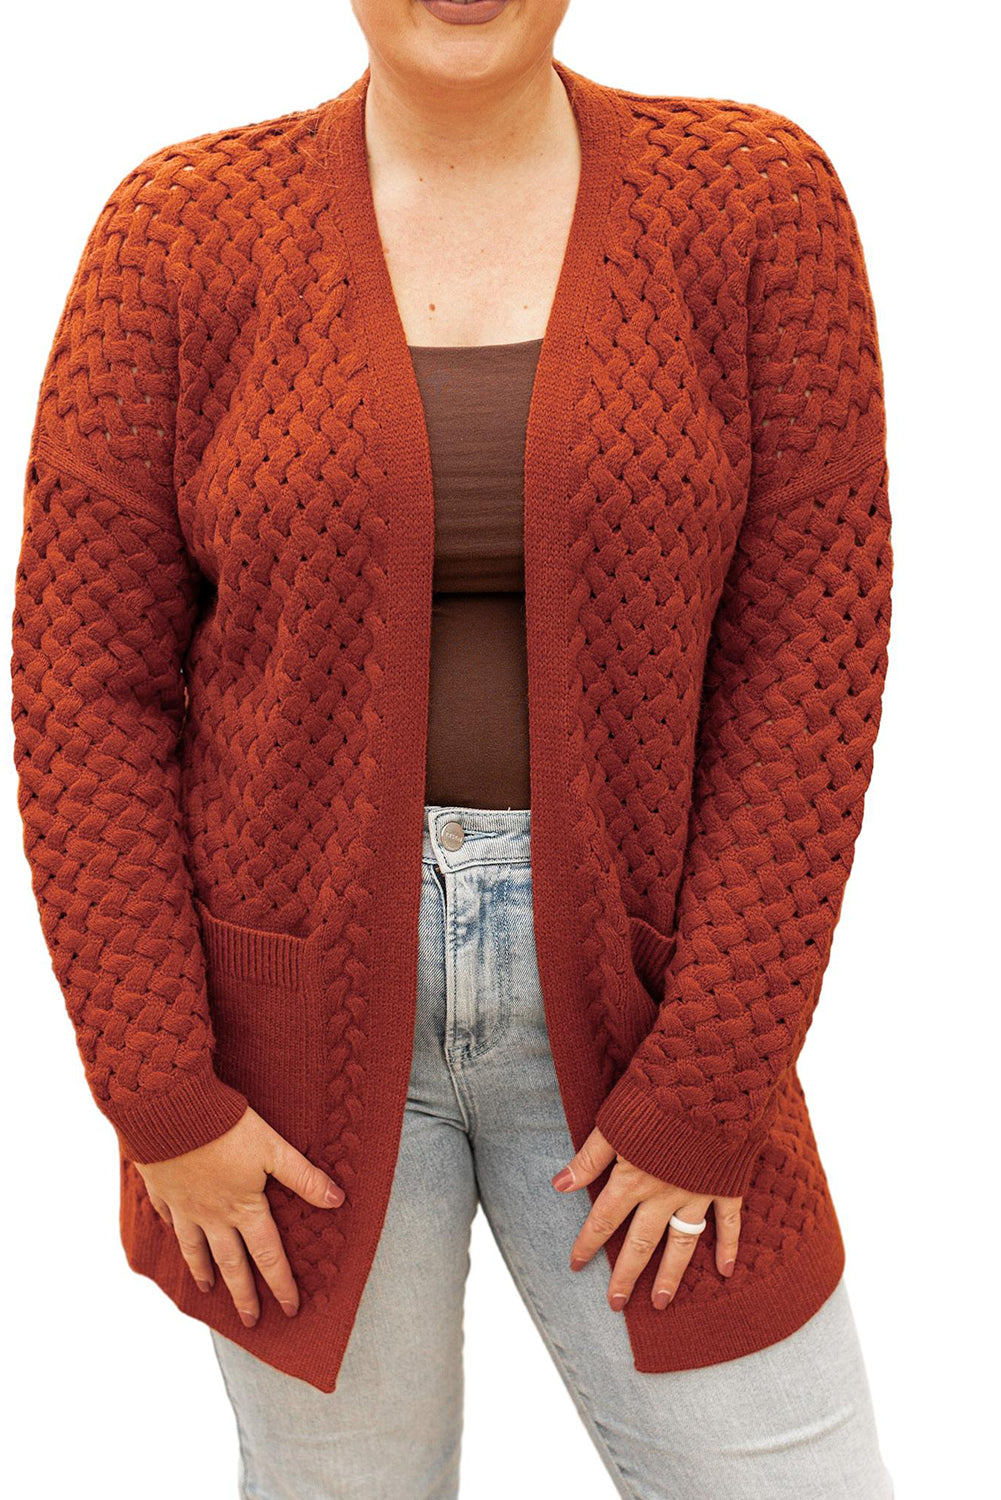 Chestnut Weave Knit Side Pockets Plus Size Cardigan